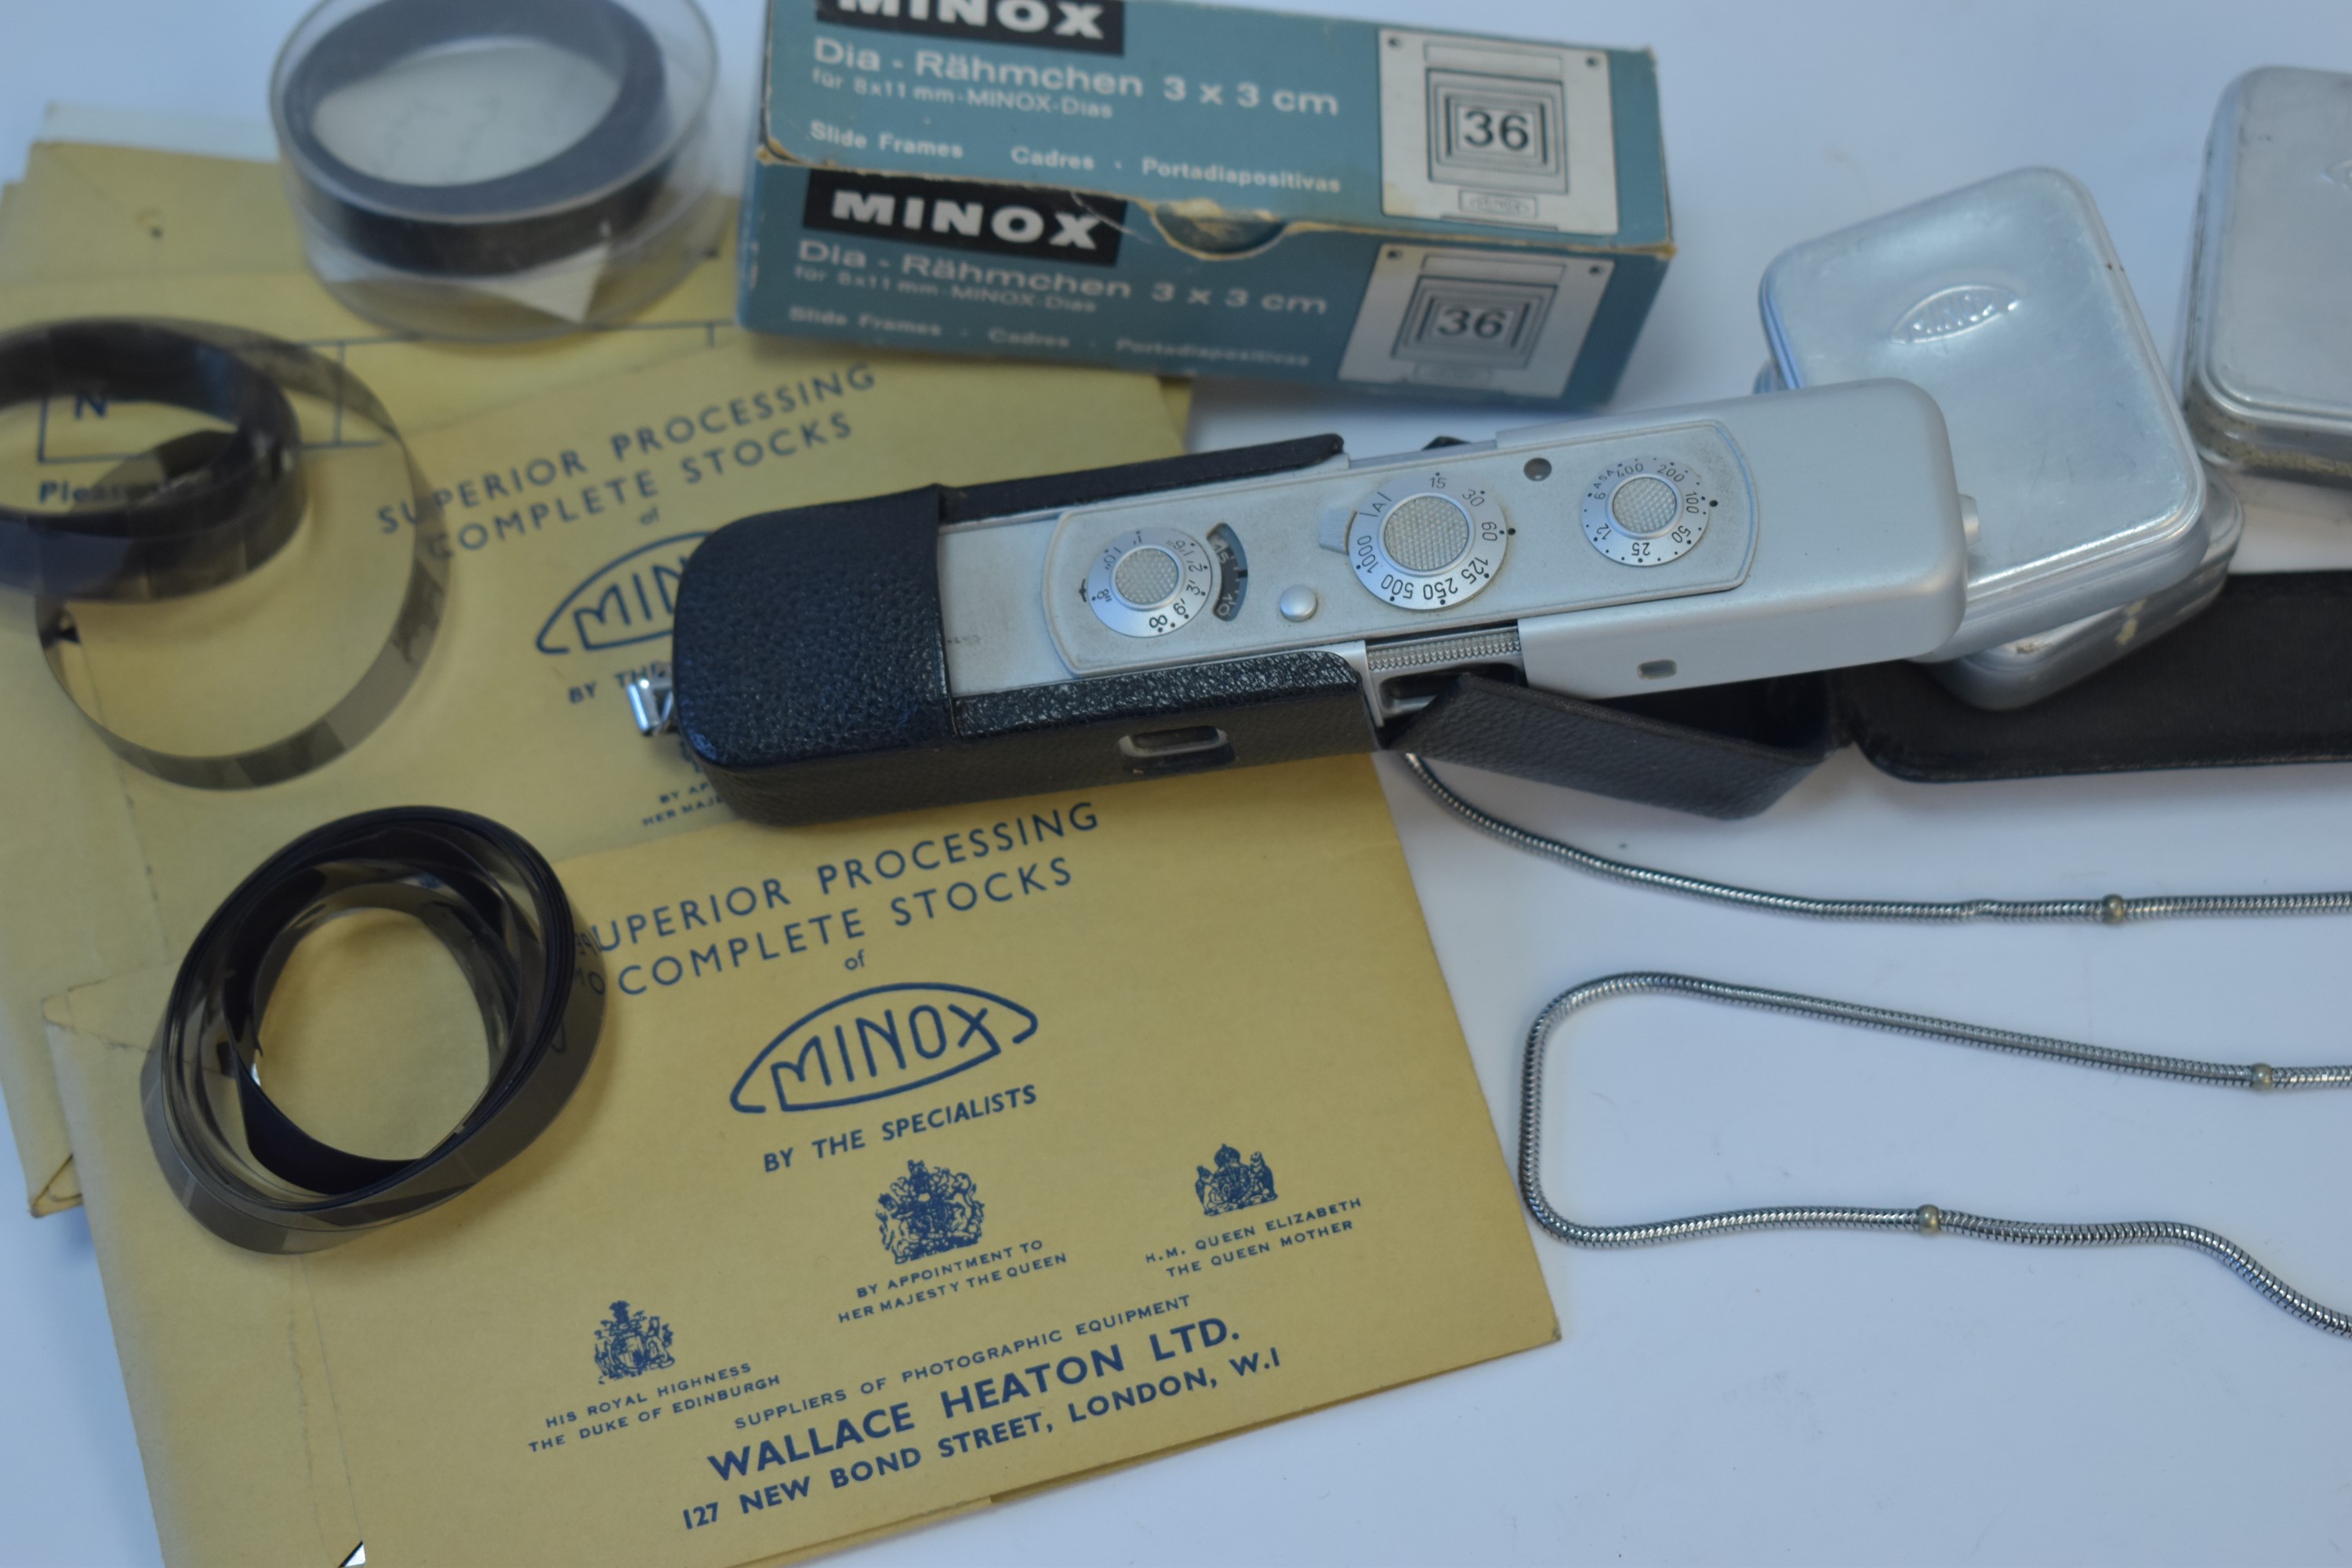 Minox C camera and accessories.